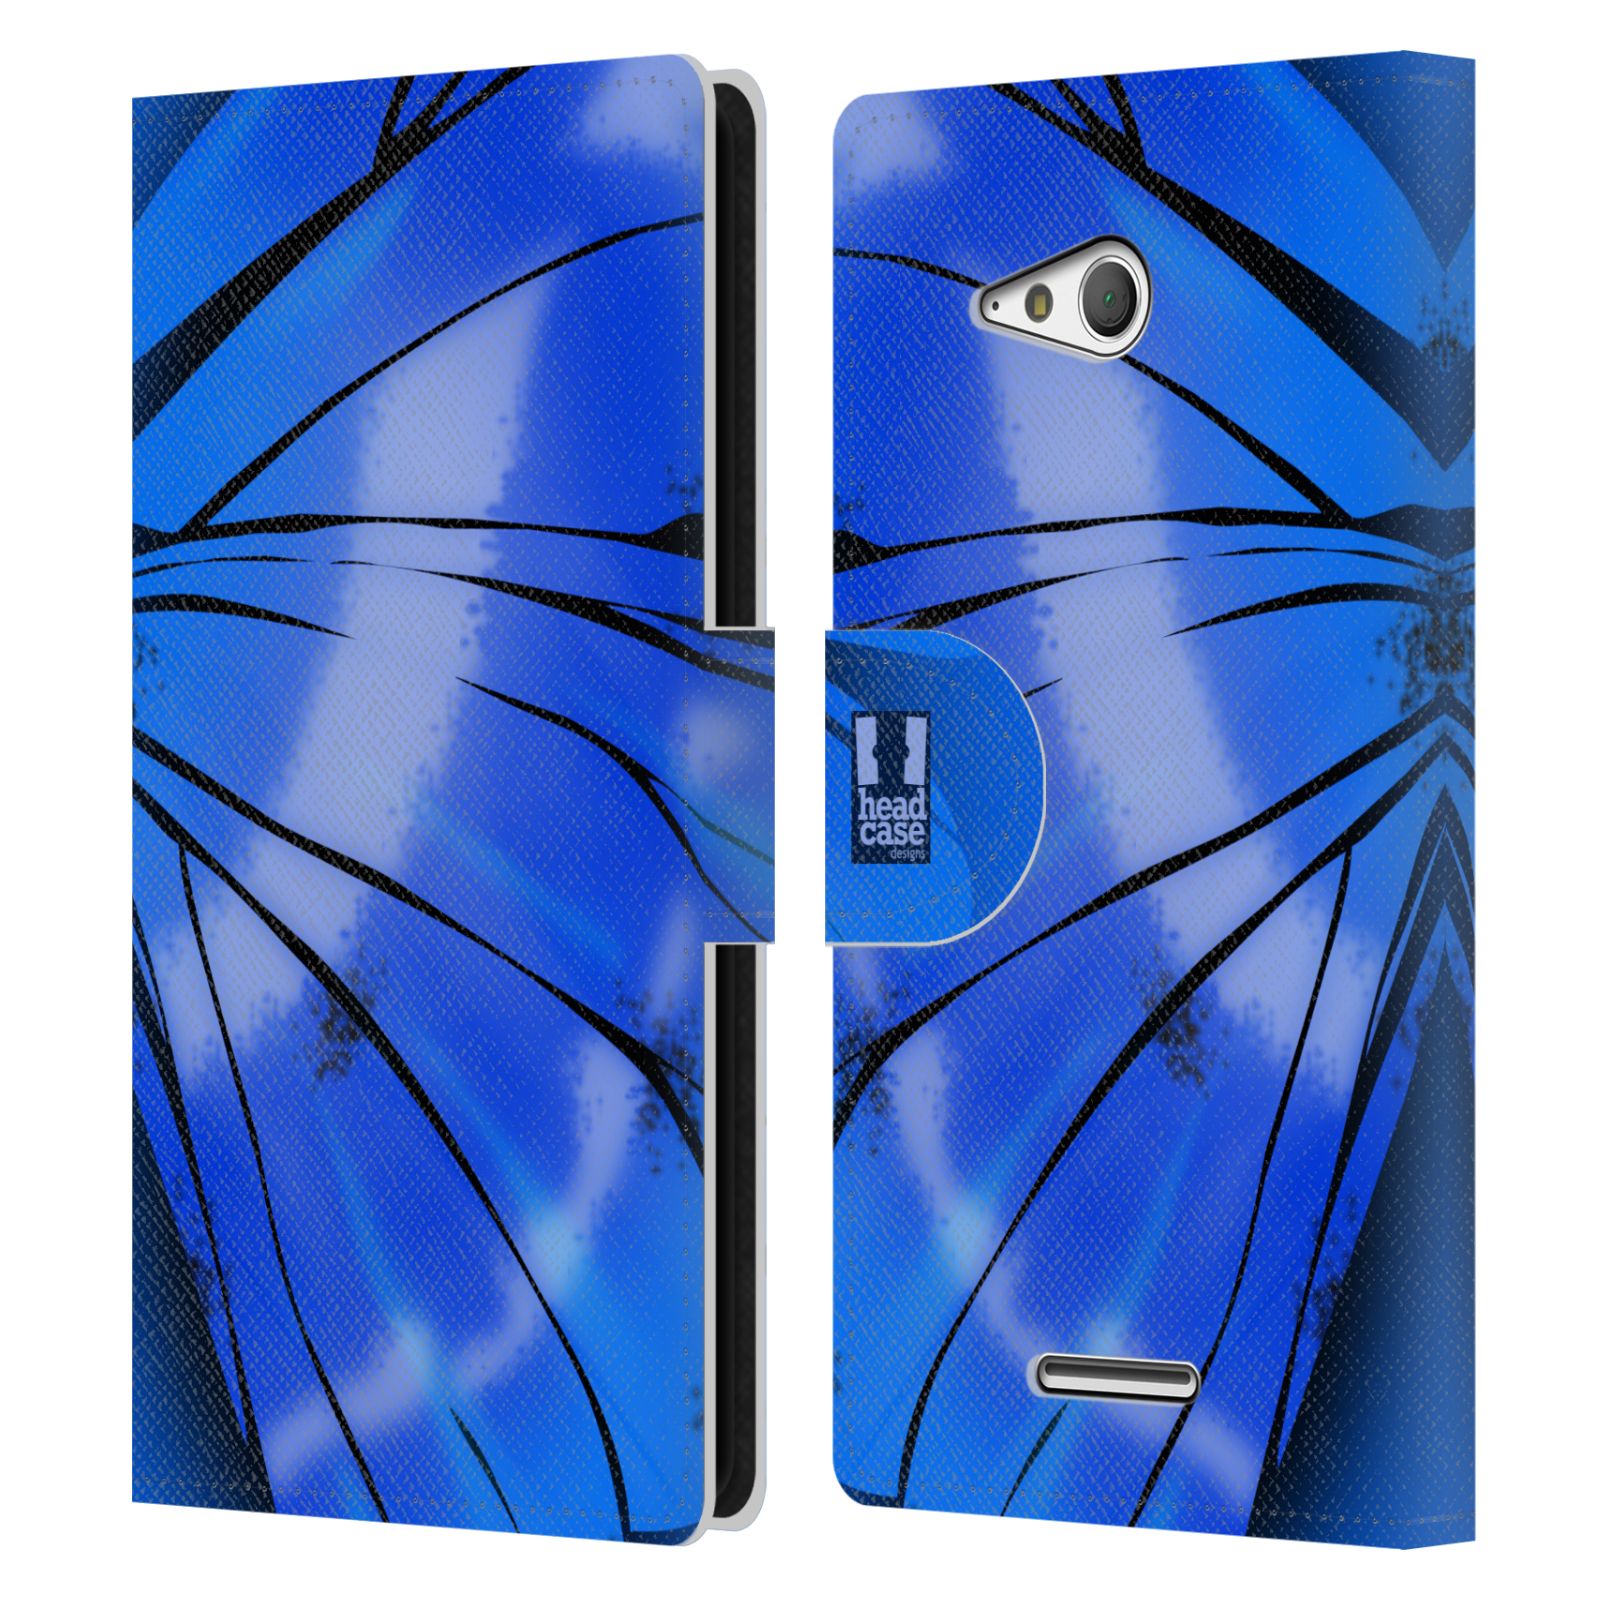 HEAD CASE Flipové pouzdro pro mobil SONY XPERIA E4g motýl a křídla kreslený vzor modrá zářivá